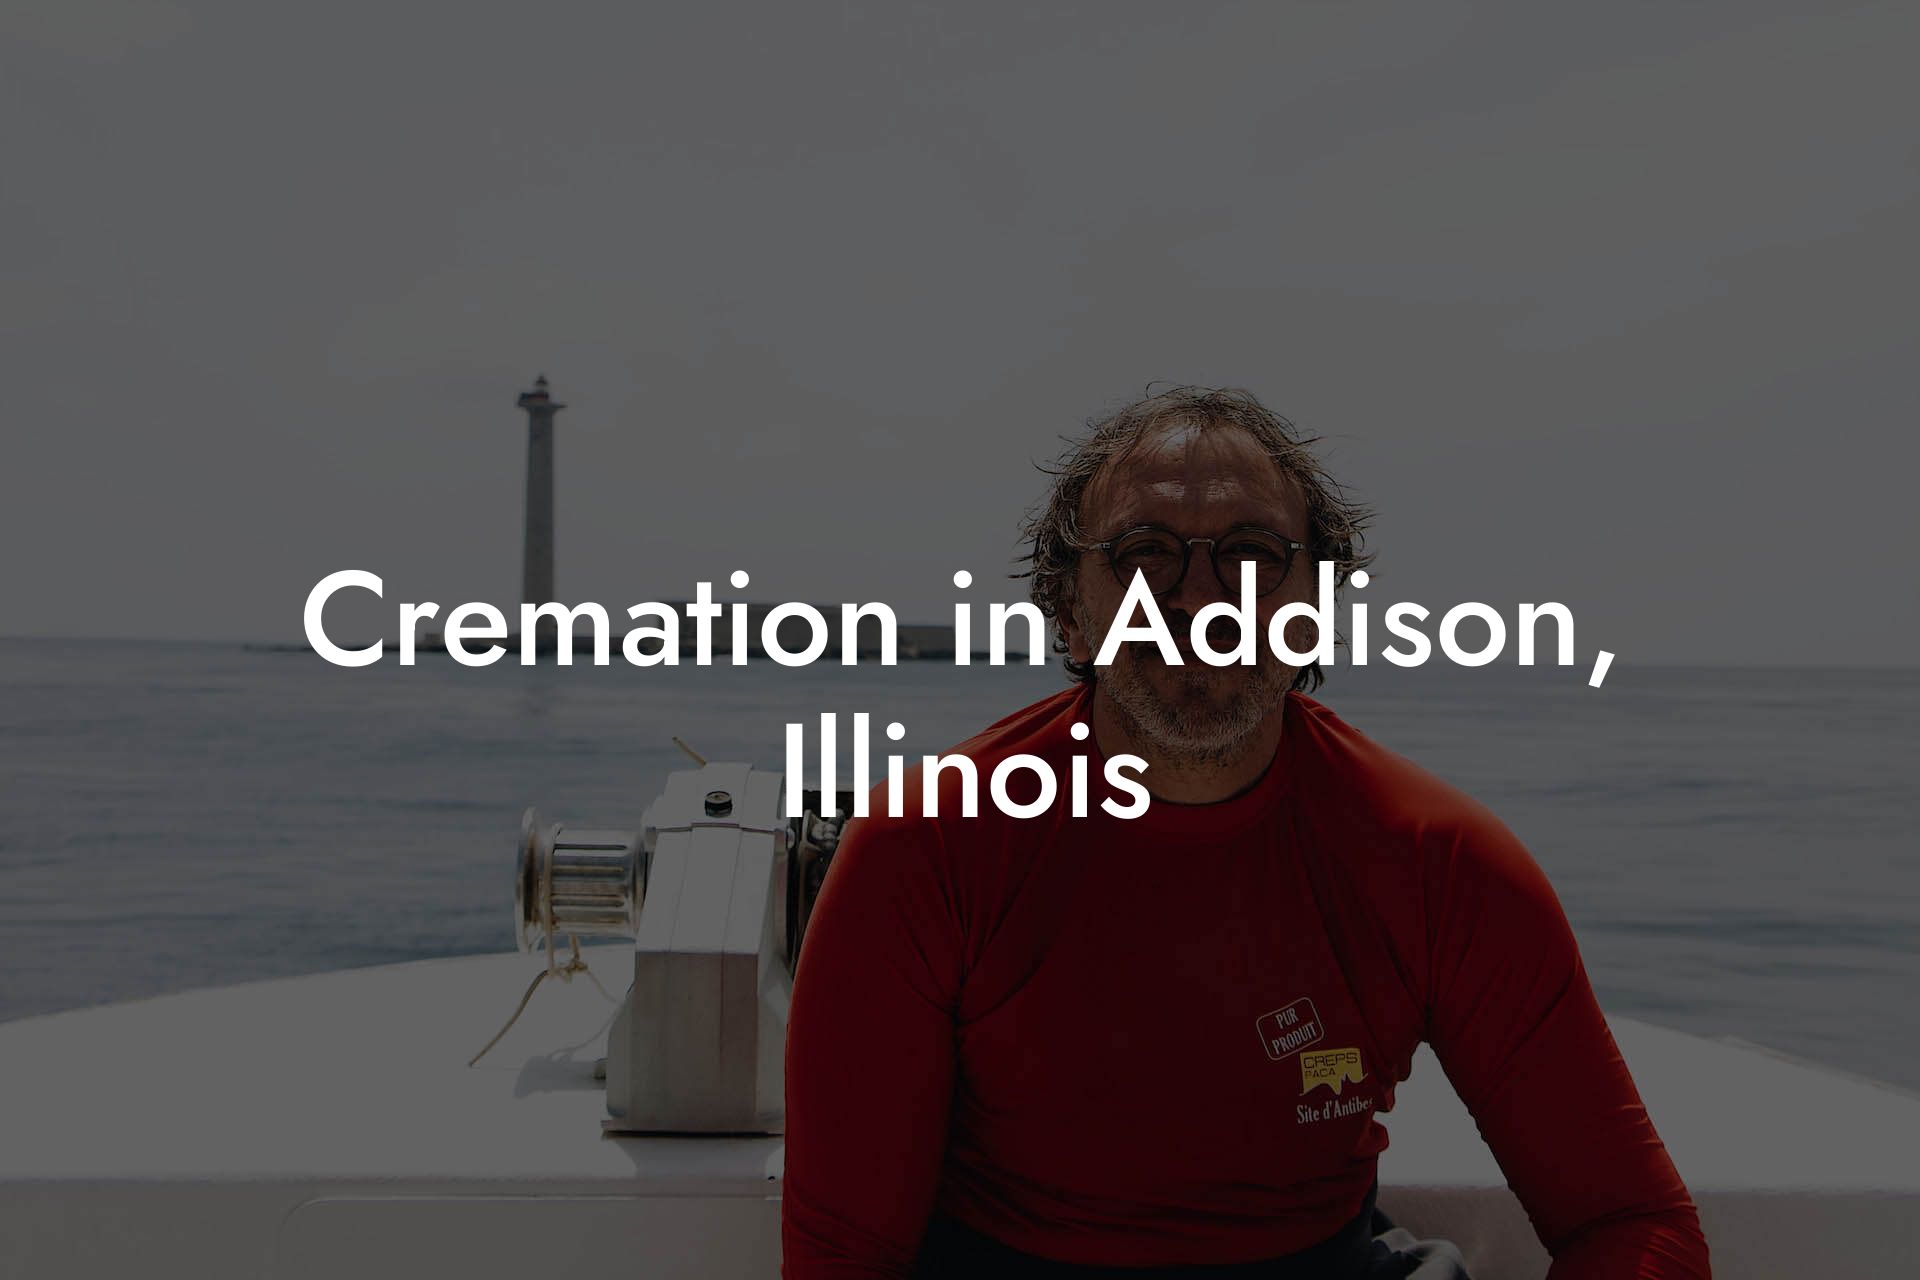 Cremation in Addison, Illinois